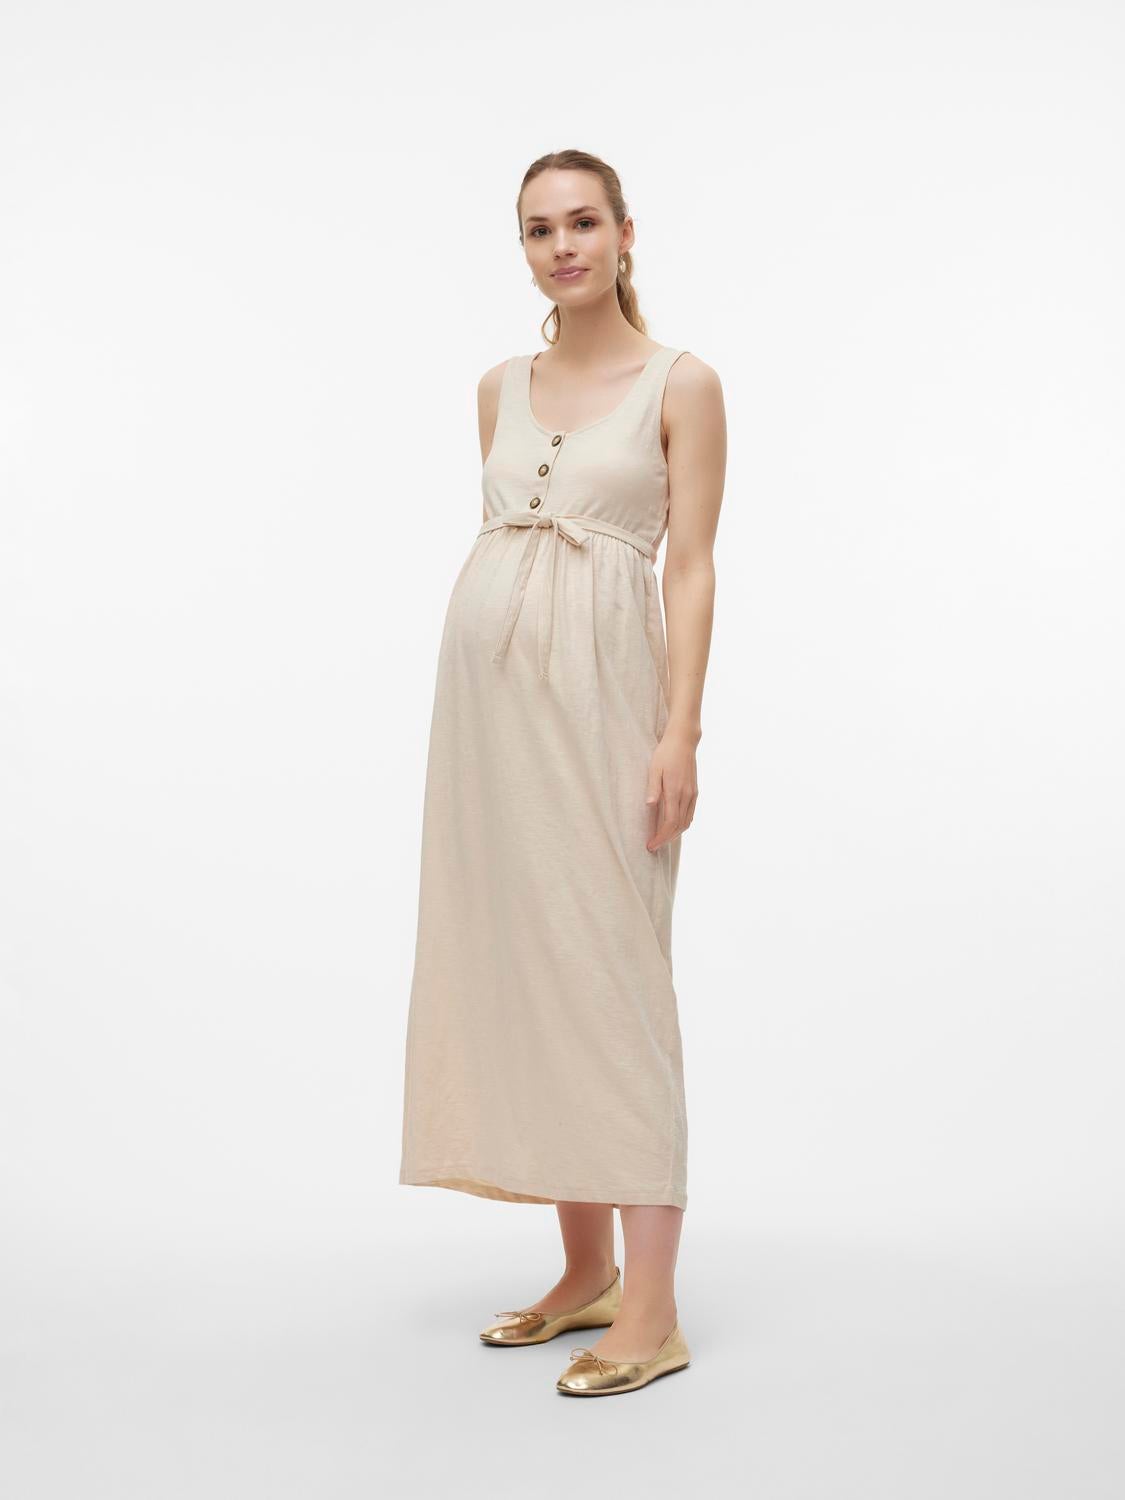 Exclusive Newborn Photoshoot Dress- Hire Now | Mama Rentals